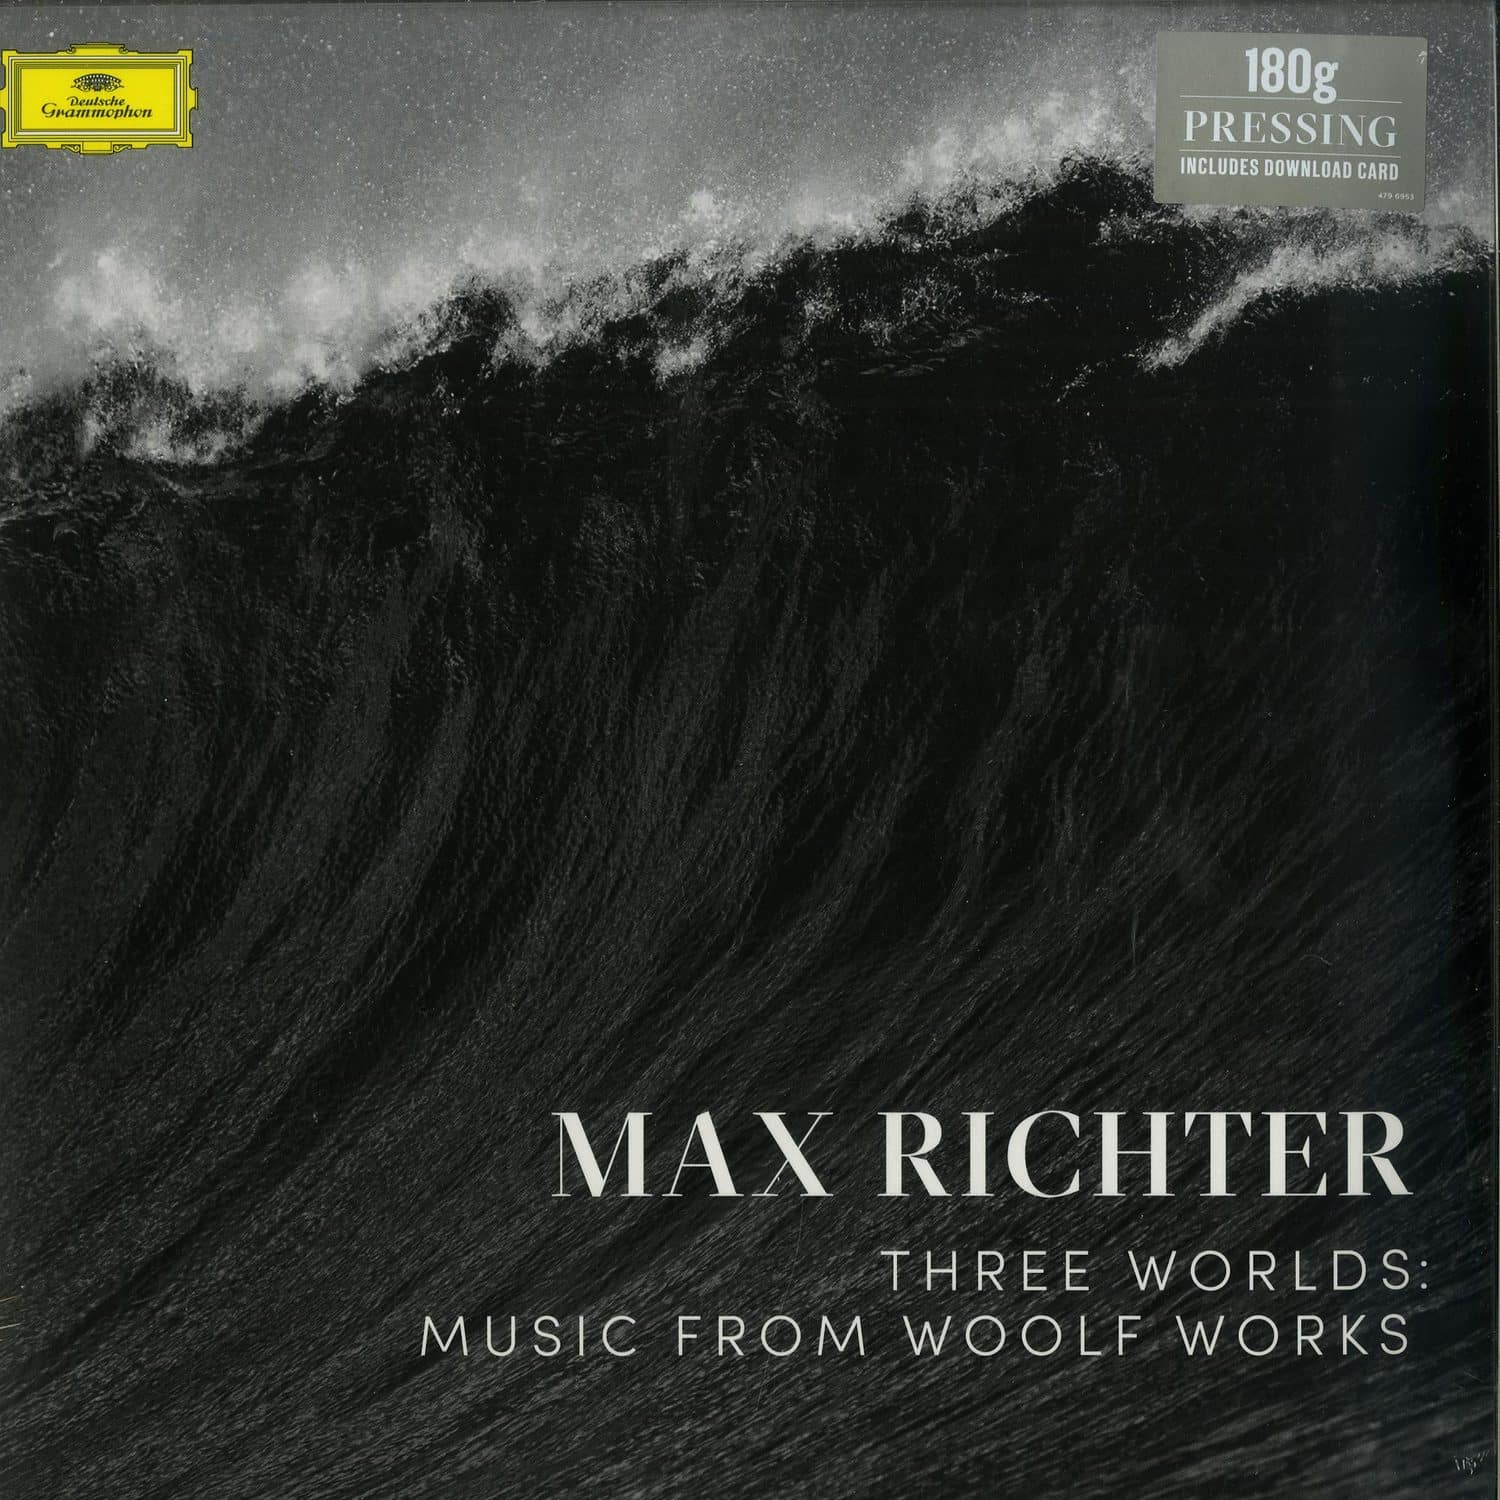 Max Richter - THREE WORLDS: MUSIC FROM WOOLF WORKS 